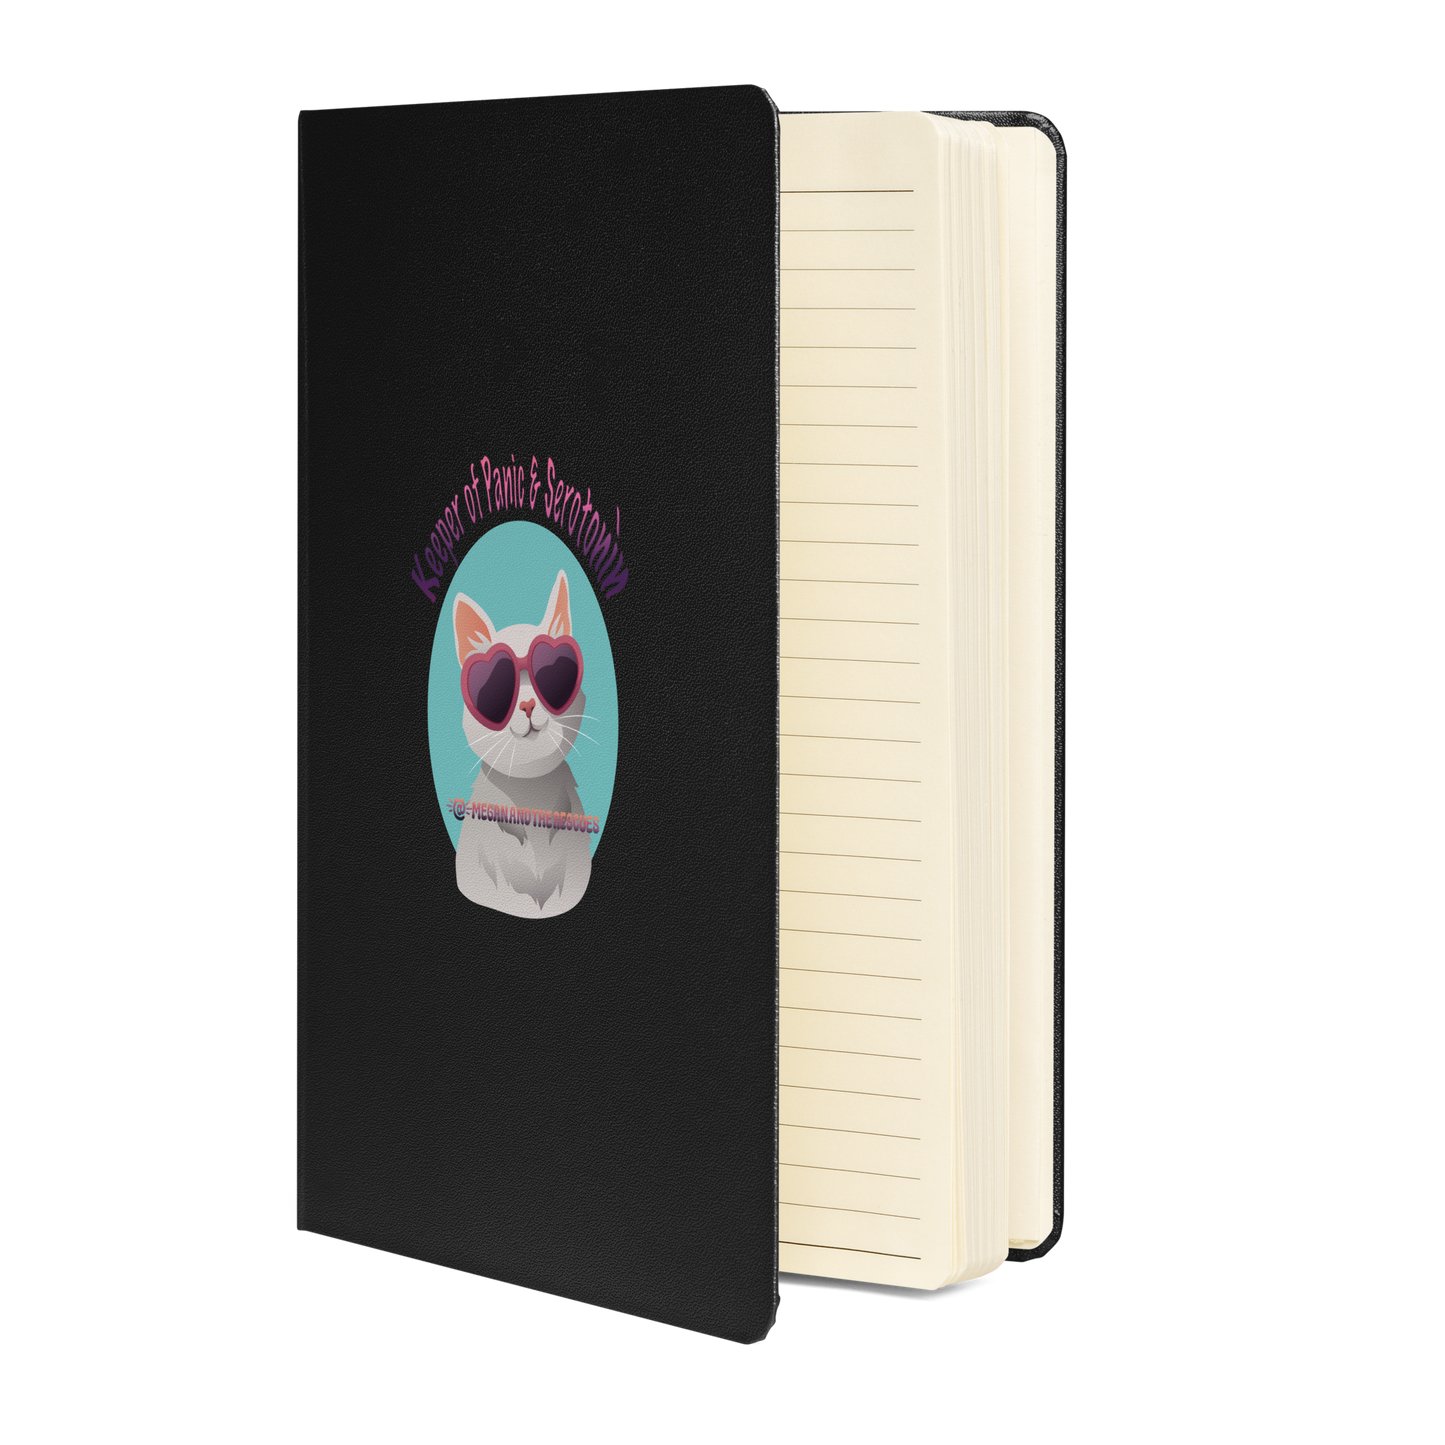 Keeper of Panic & Serotonin : Baby Bird - Hardcover bound notebook